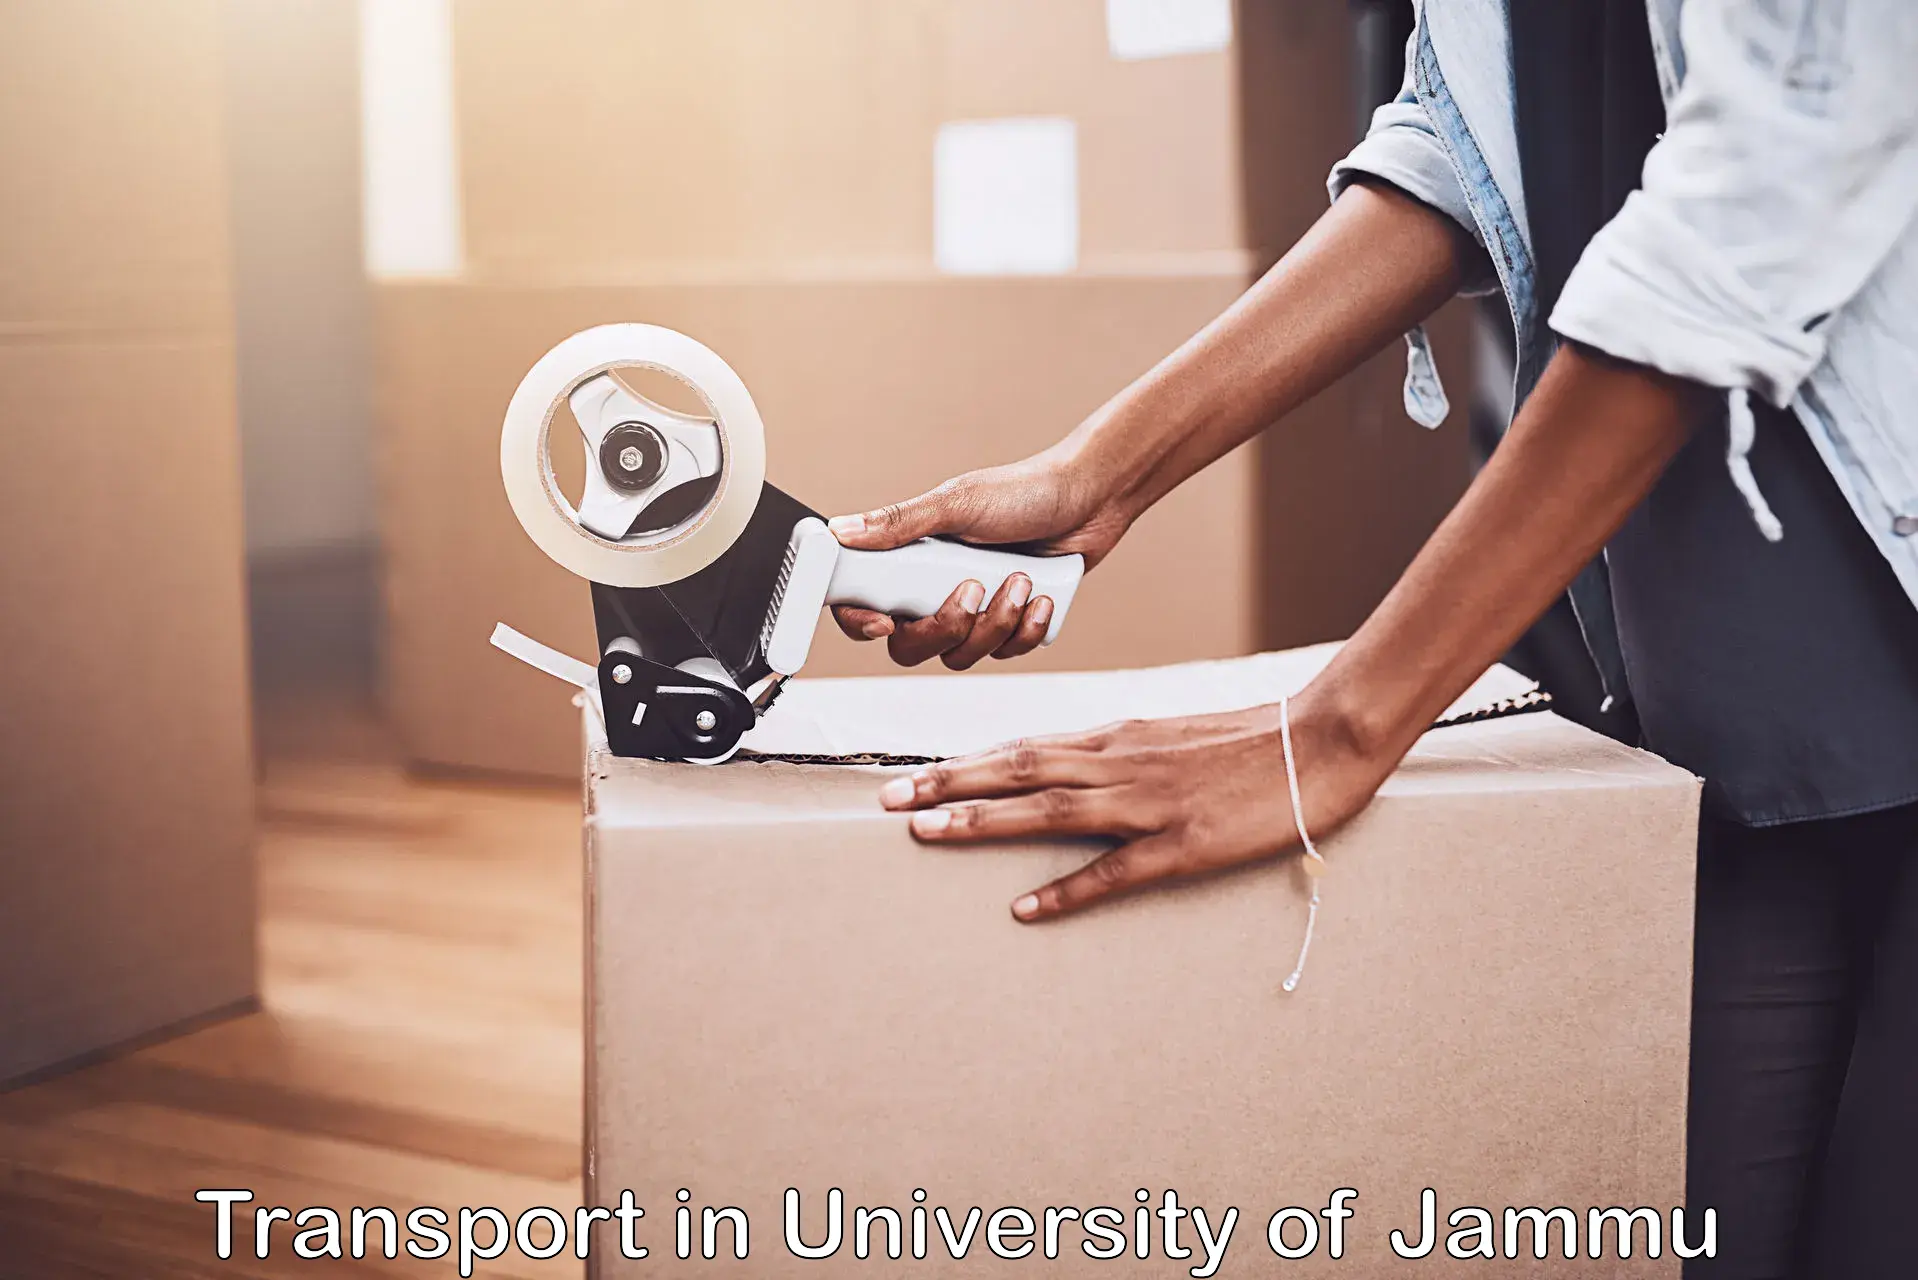 Daily parcel service transport in University of Jammu